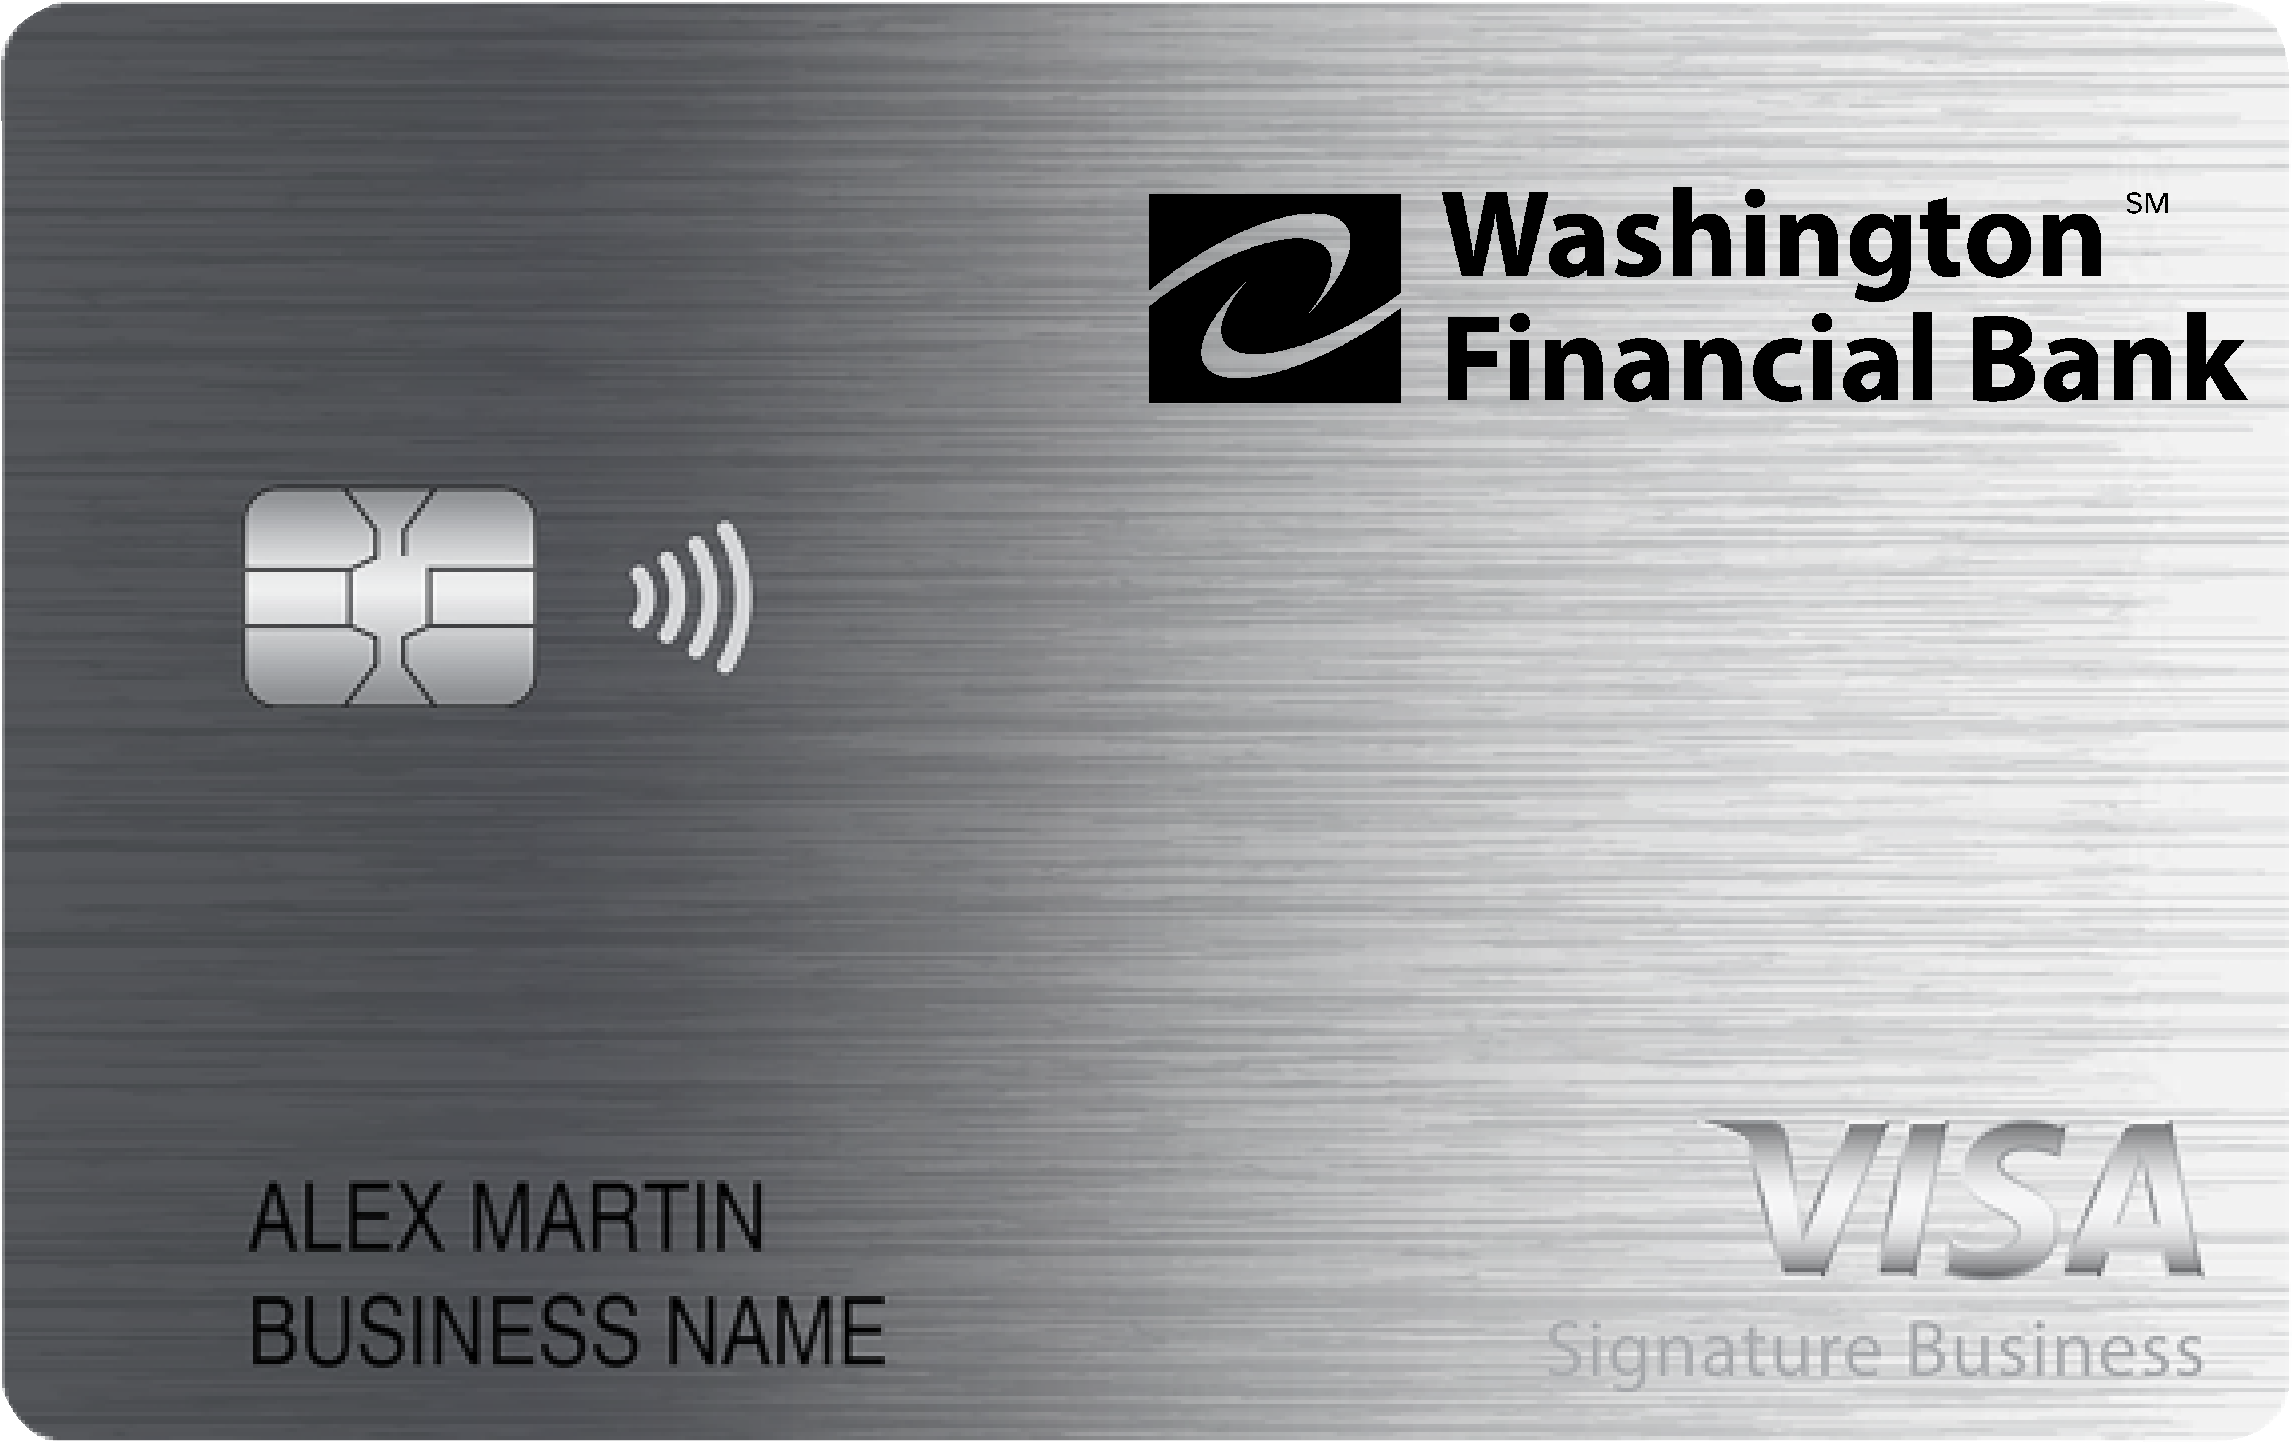 Washington Financial Bank Smart Business Rewards Card